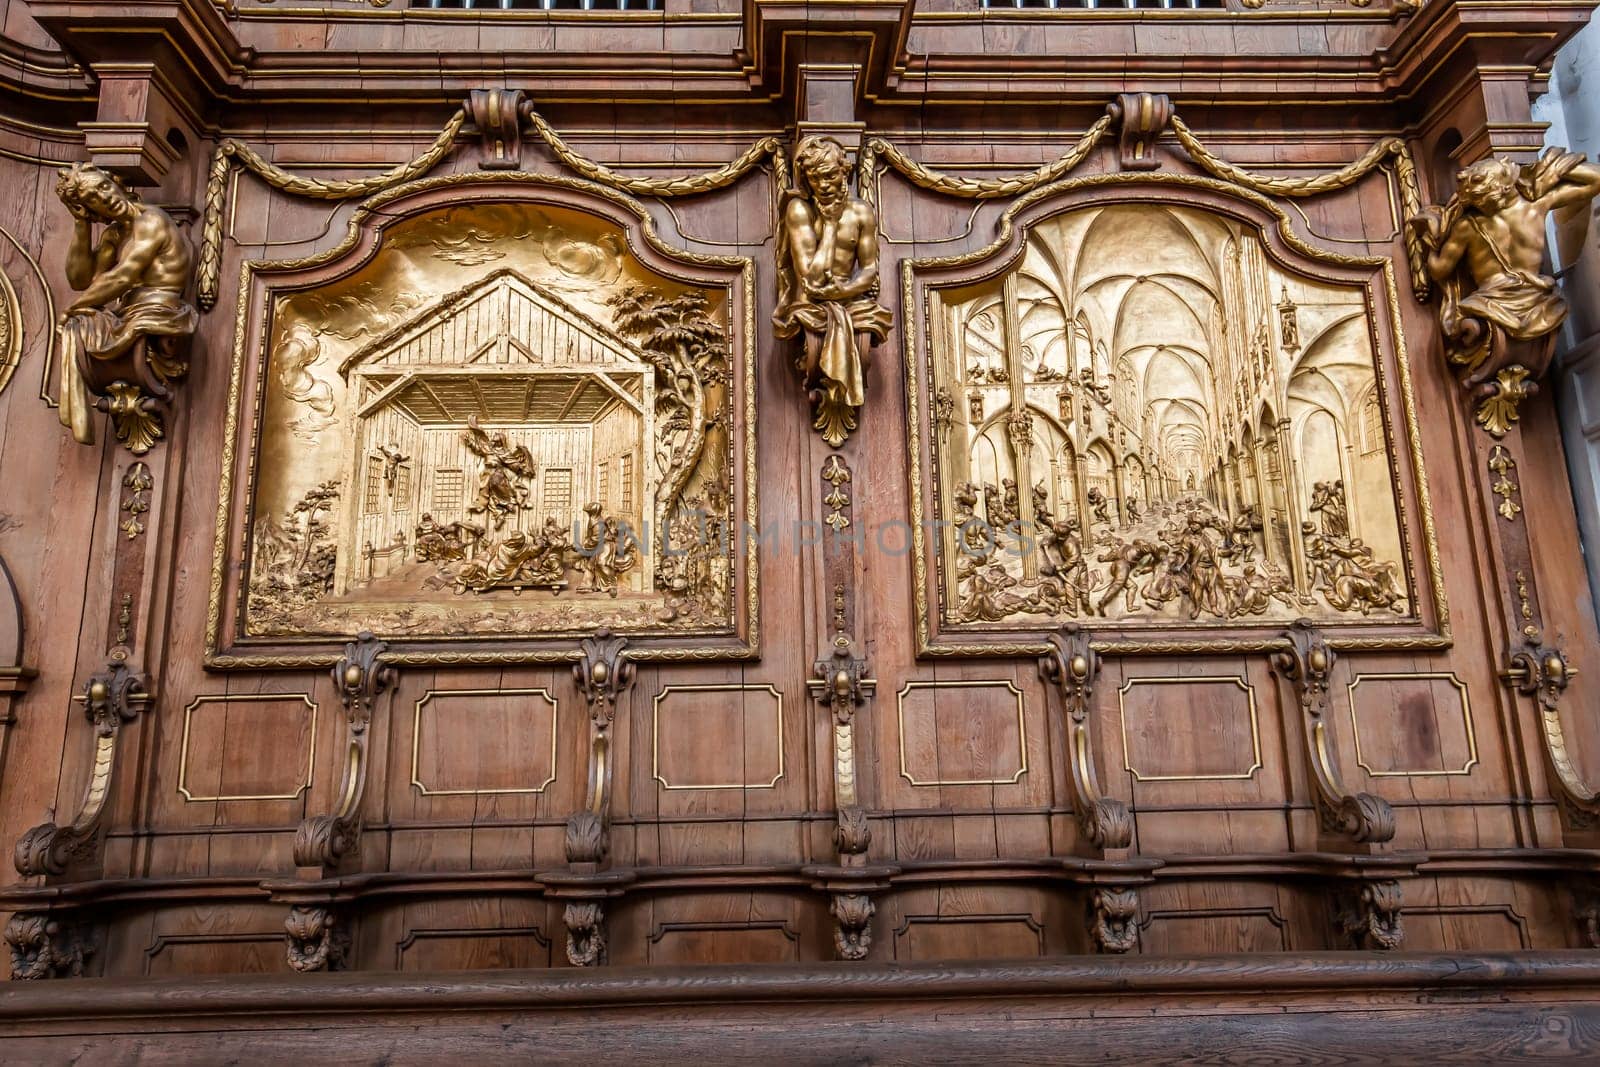 interiors of Wiblingen abbey, bavaria, germany by photogolfer